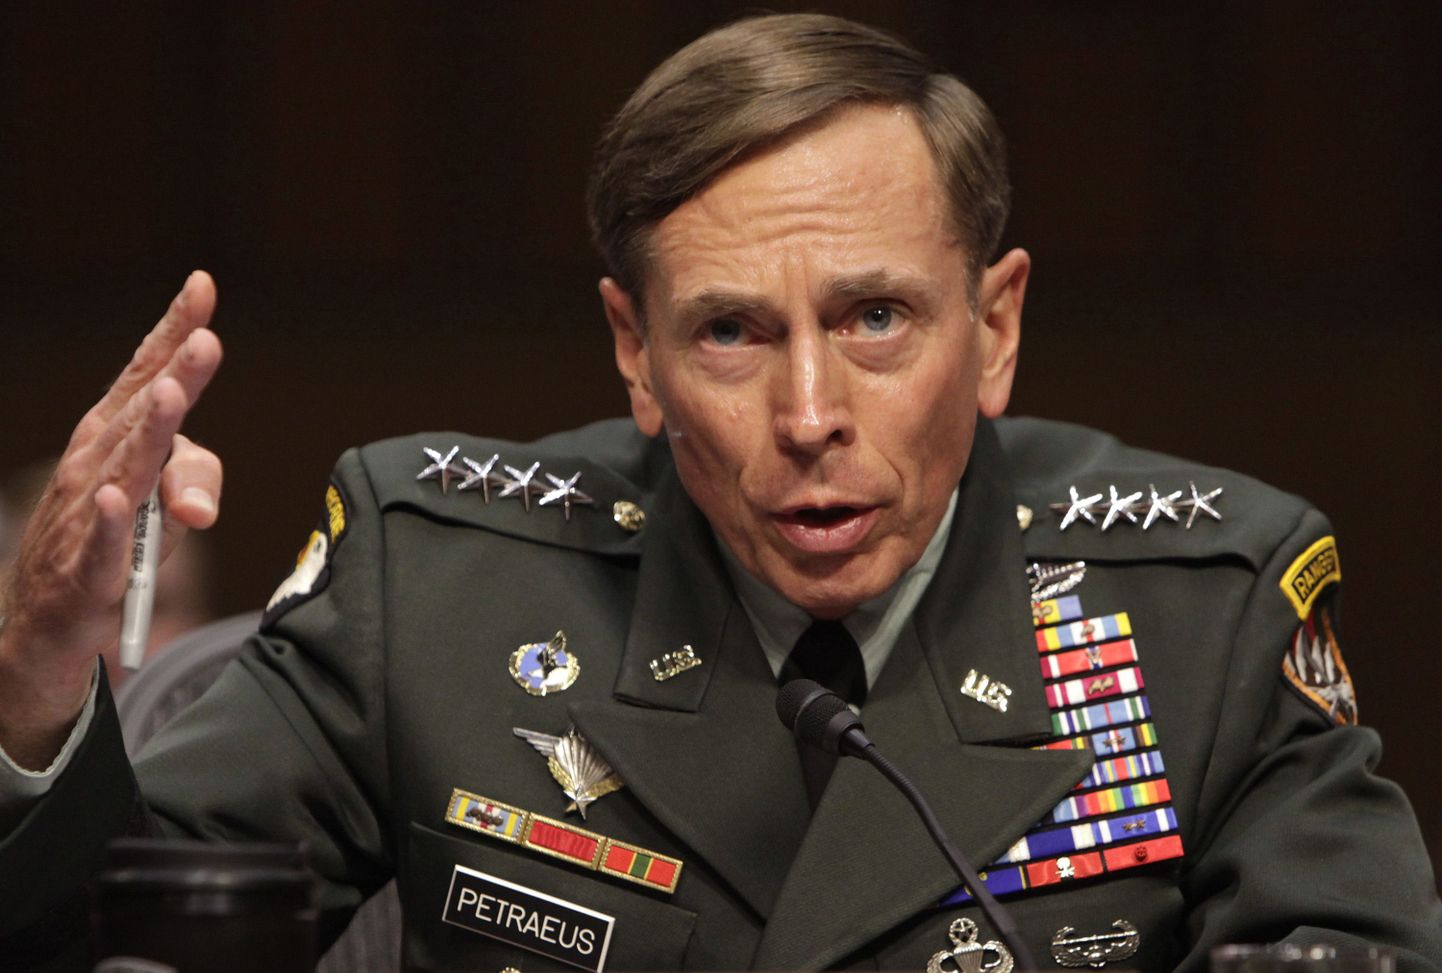 USA Luure Keskagentuuri (CIA) endine juht David Petraeus